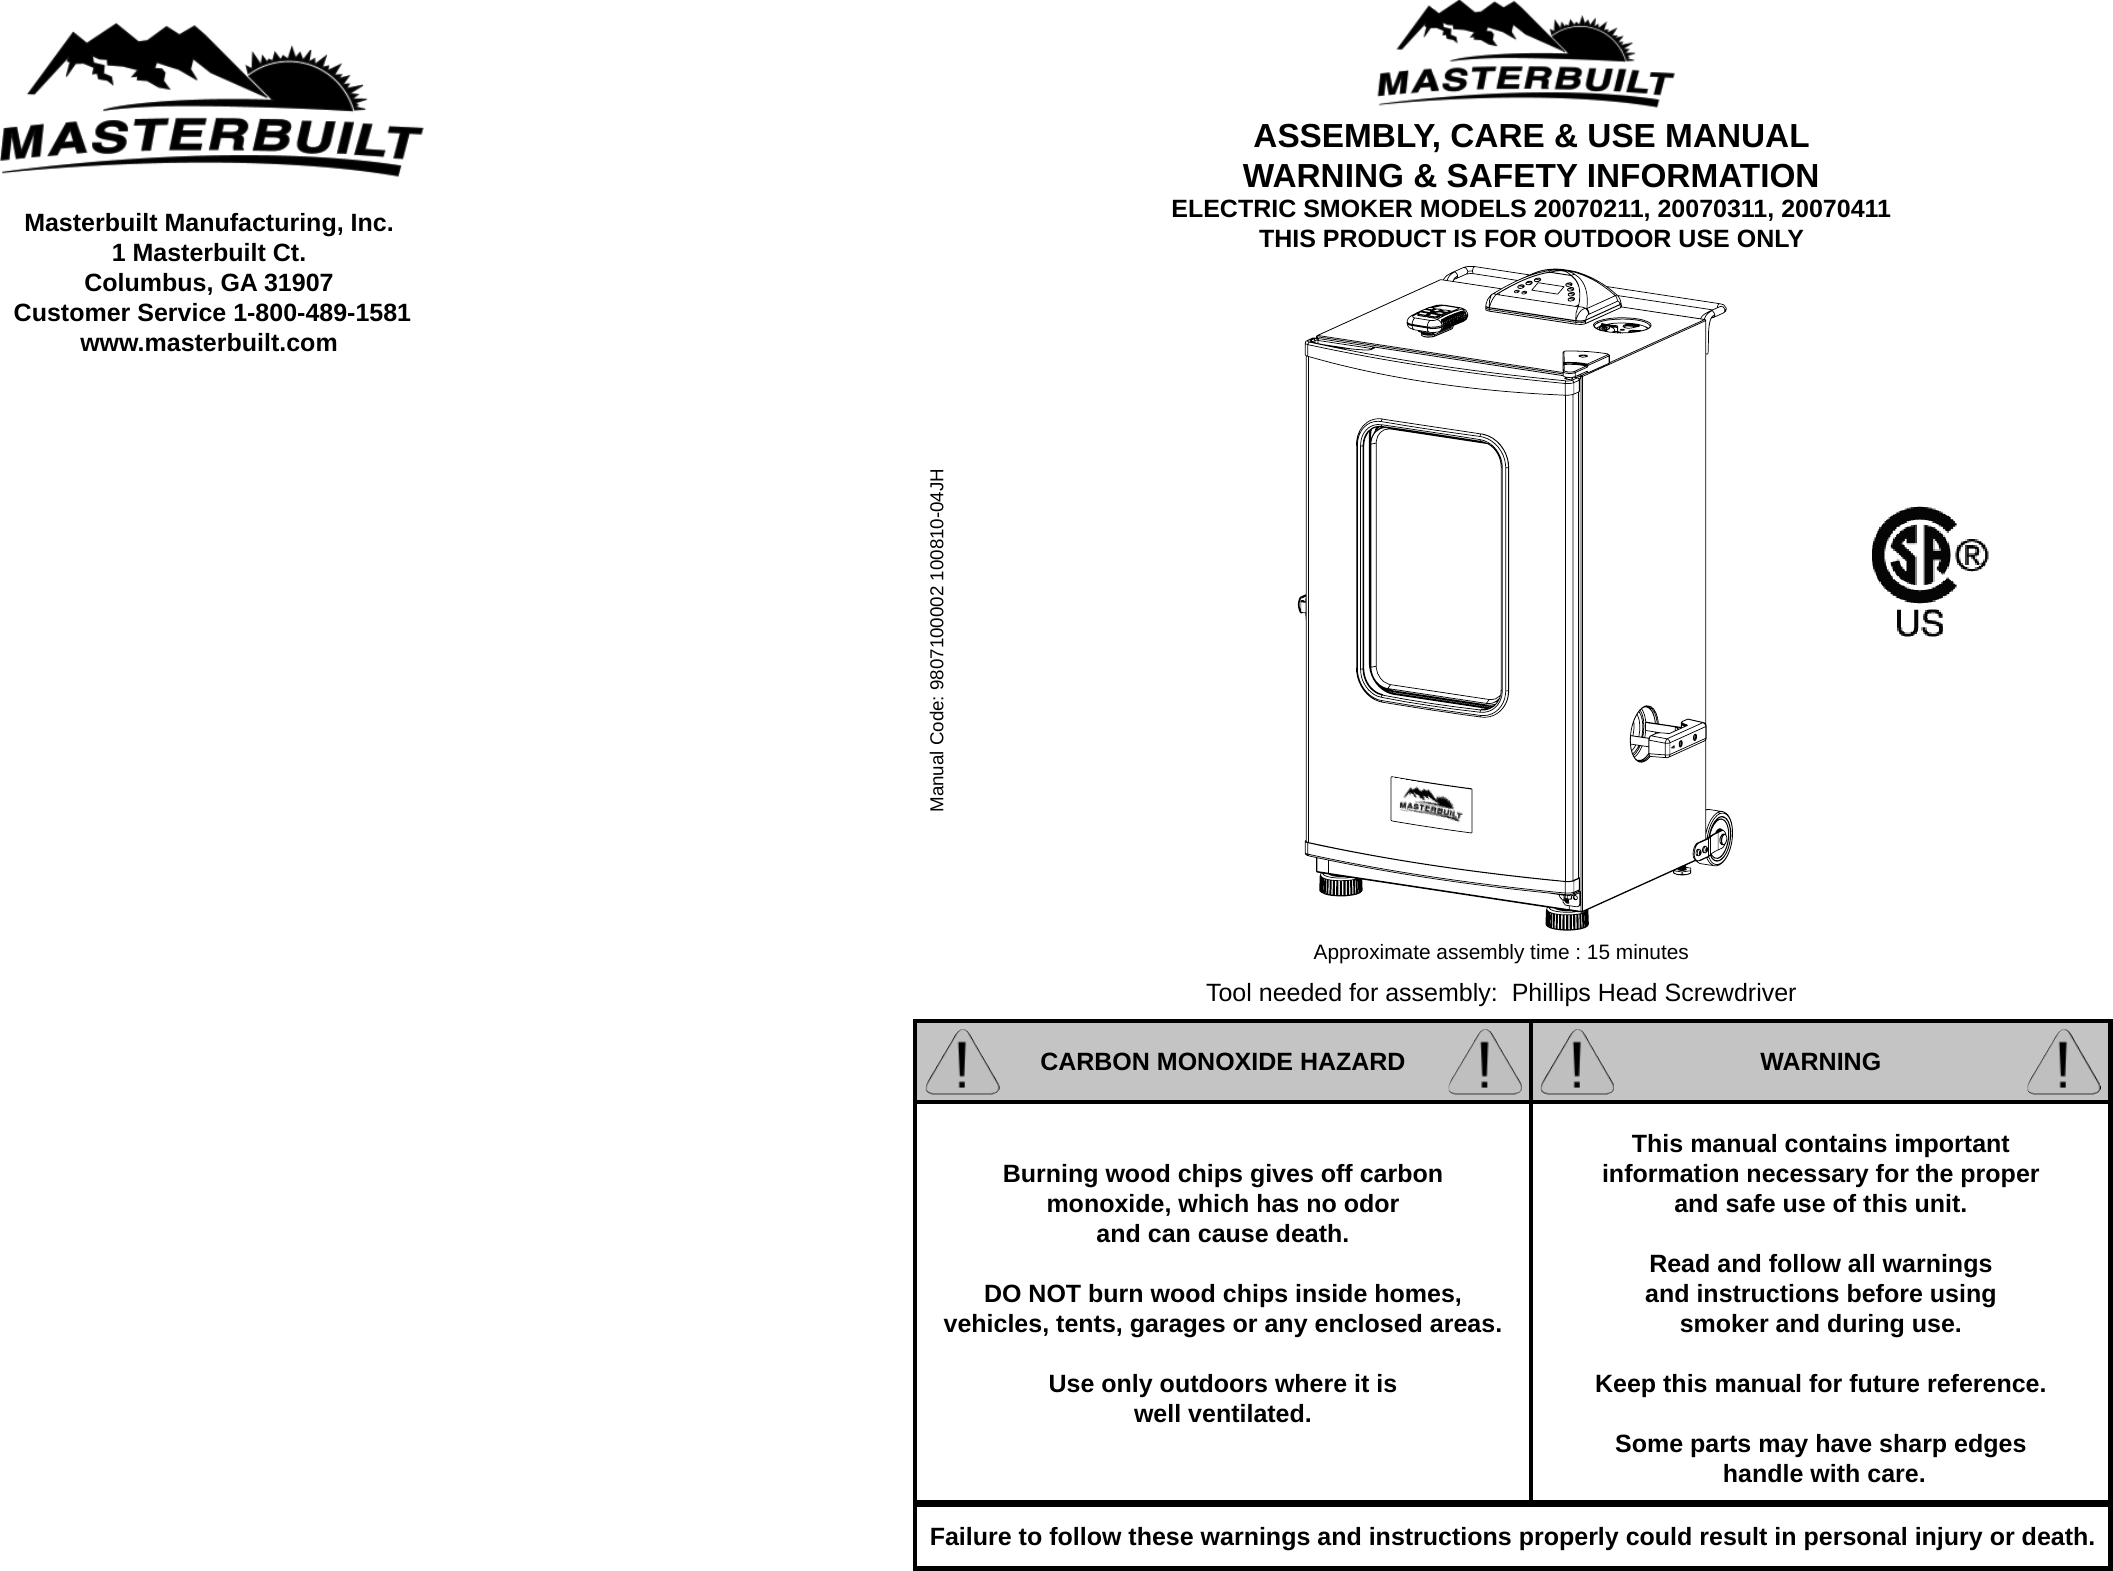 Masterbuilt Electric Smoker Instruction Manual